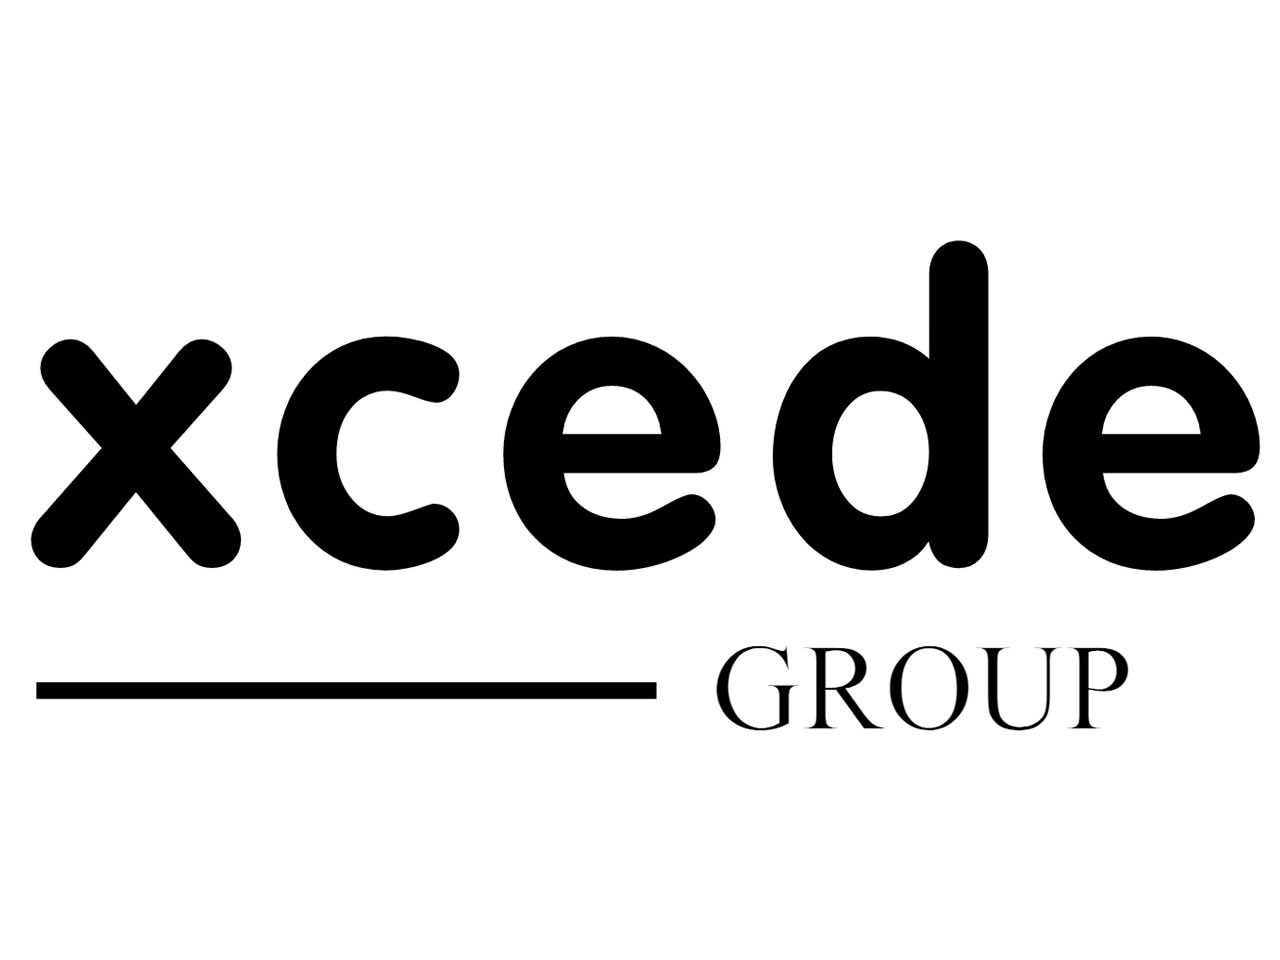 Xcede Group Undergo Major Reorganisation and Rebrand